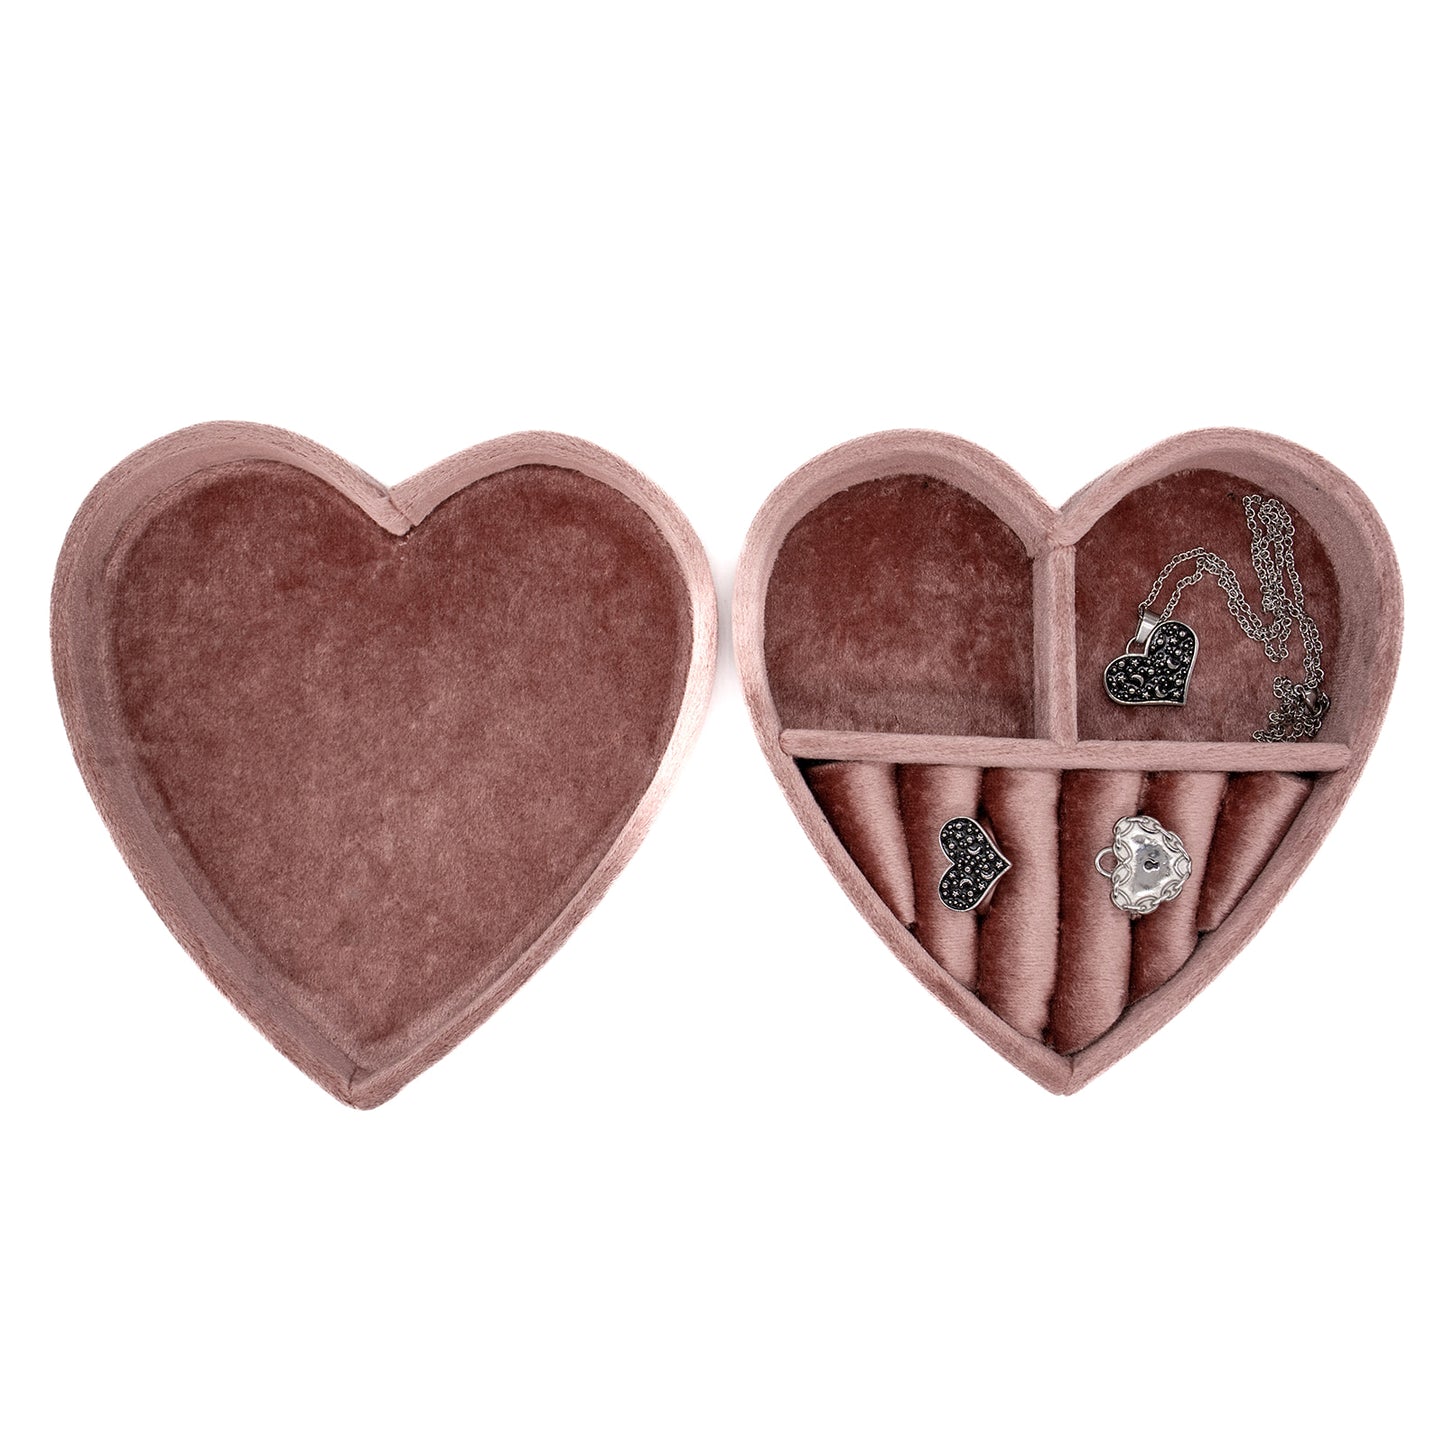 Chained Up Cupid Pink Heart Jewellery Box mysticumluna2021